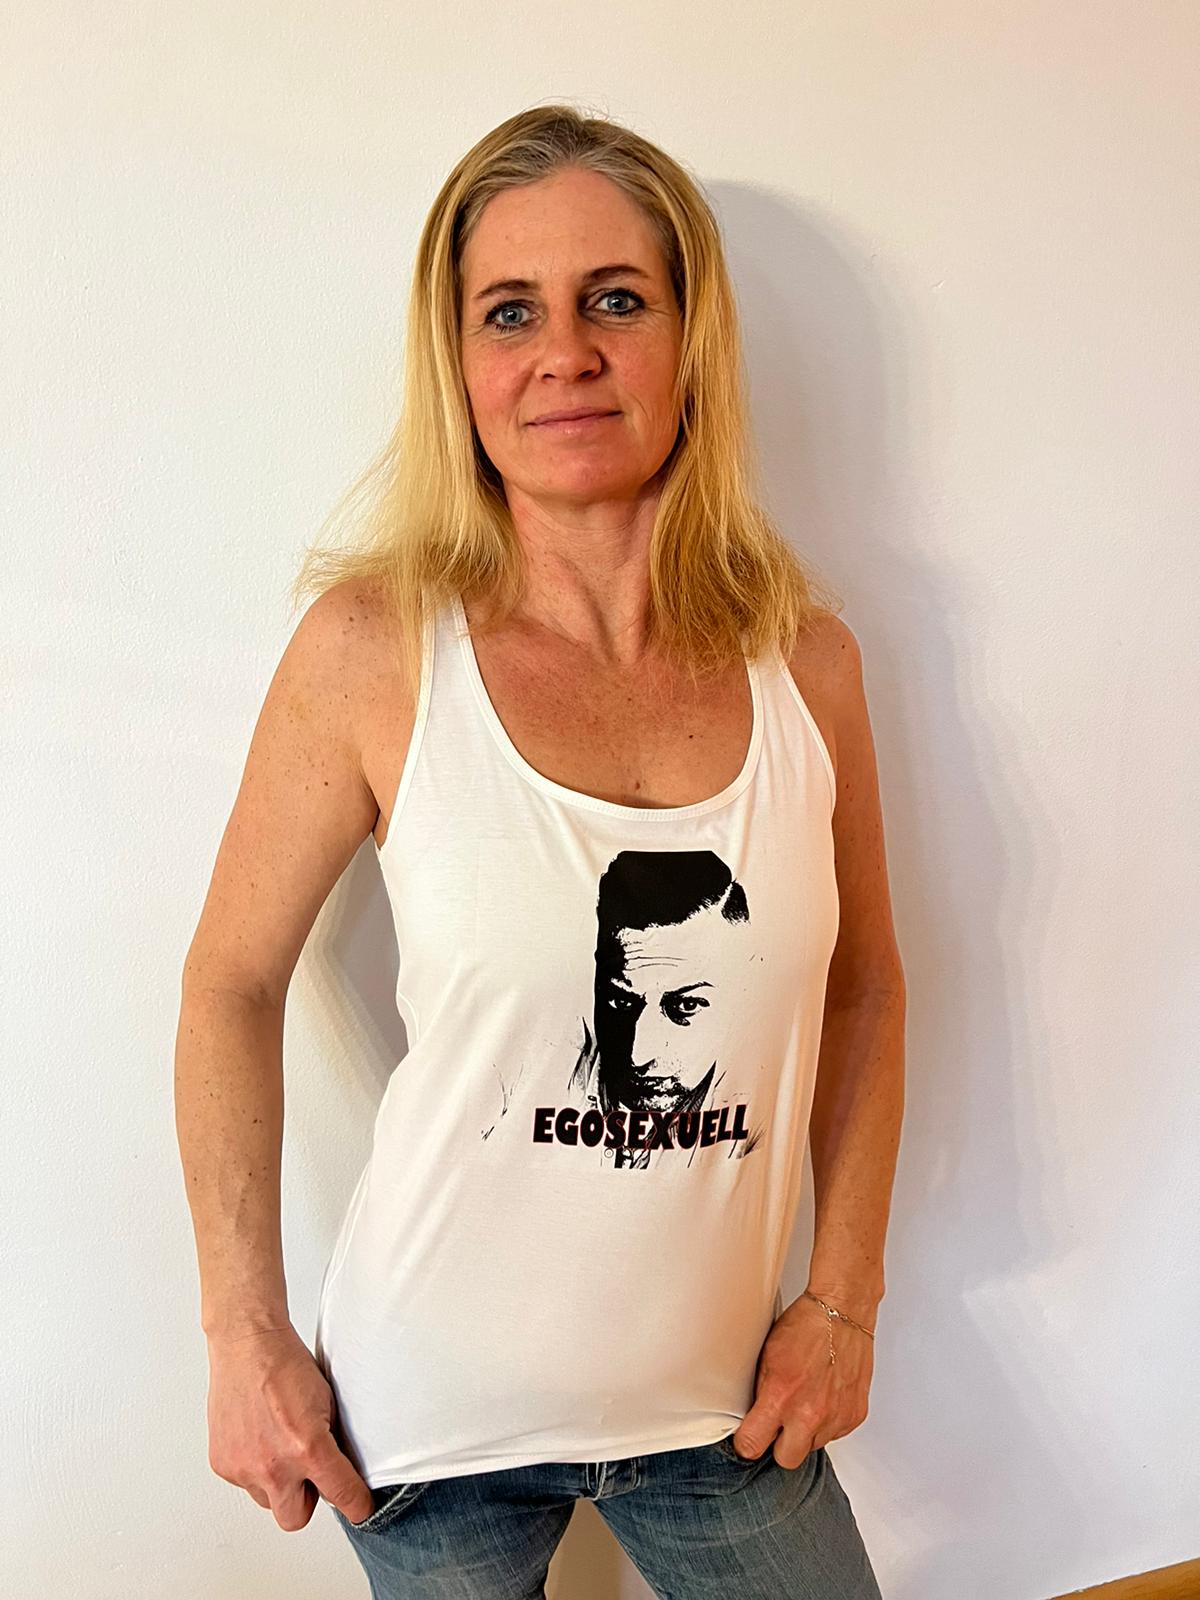 Egosexuell T-Shirt Frau